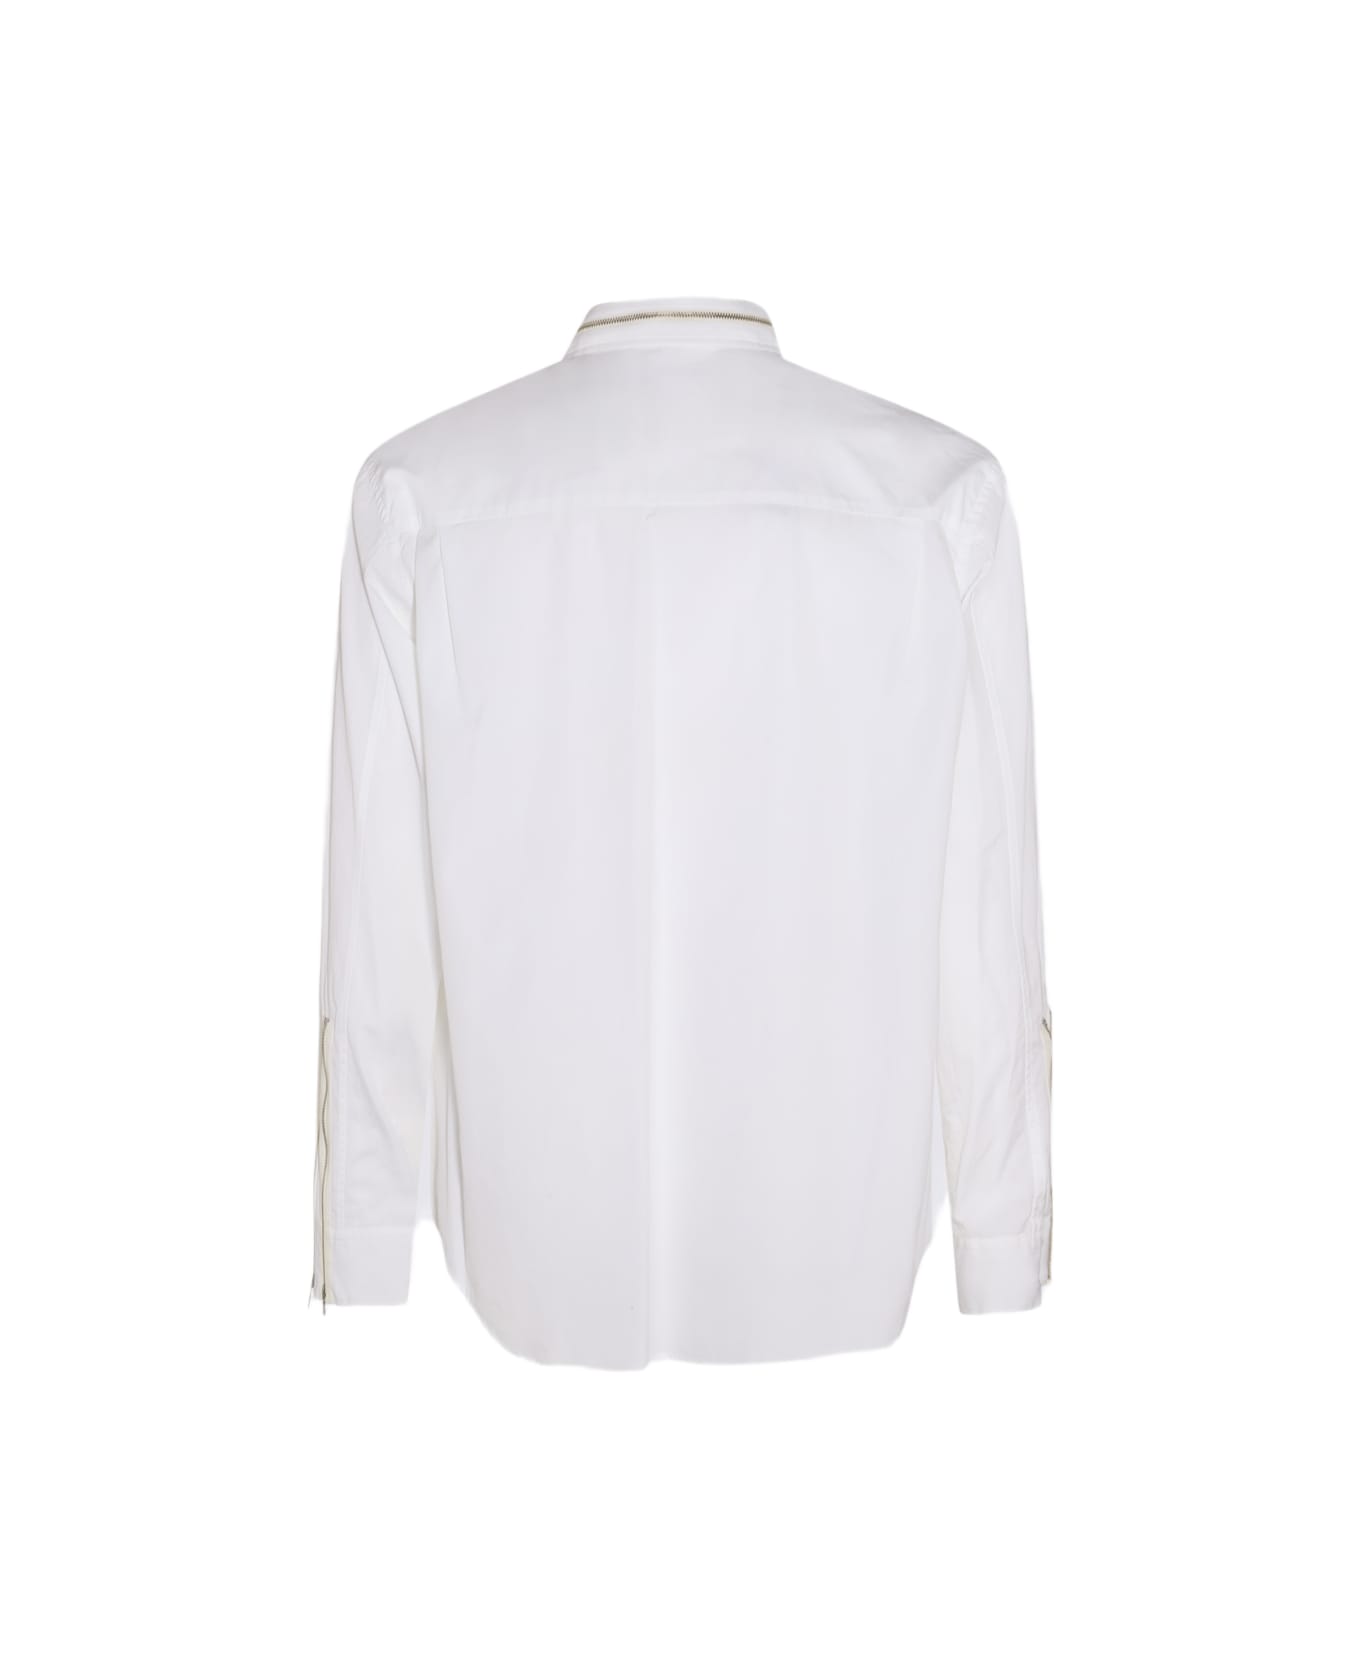 Undercover Jun Takahashi White Cotton Shirt シャツ